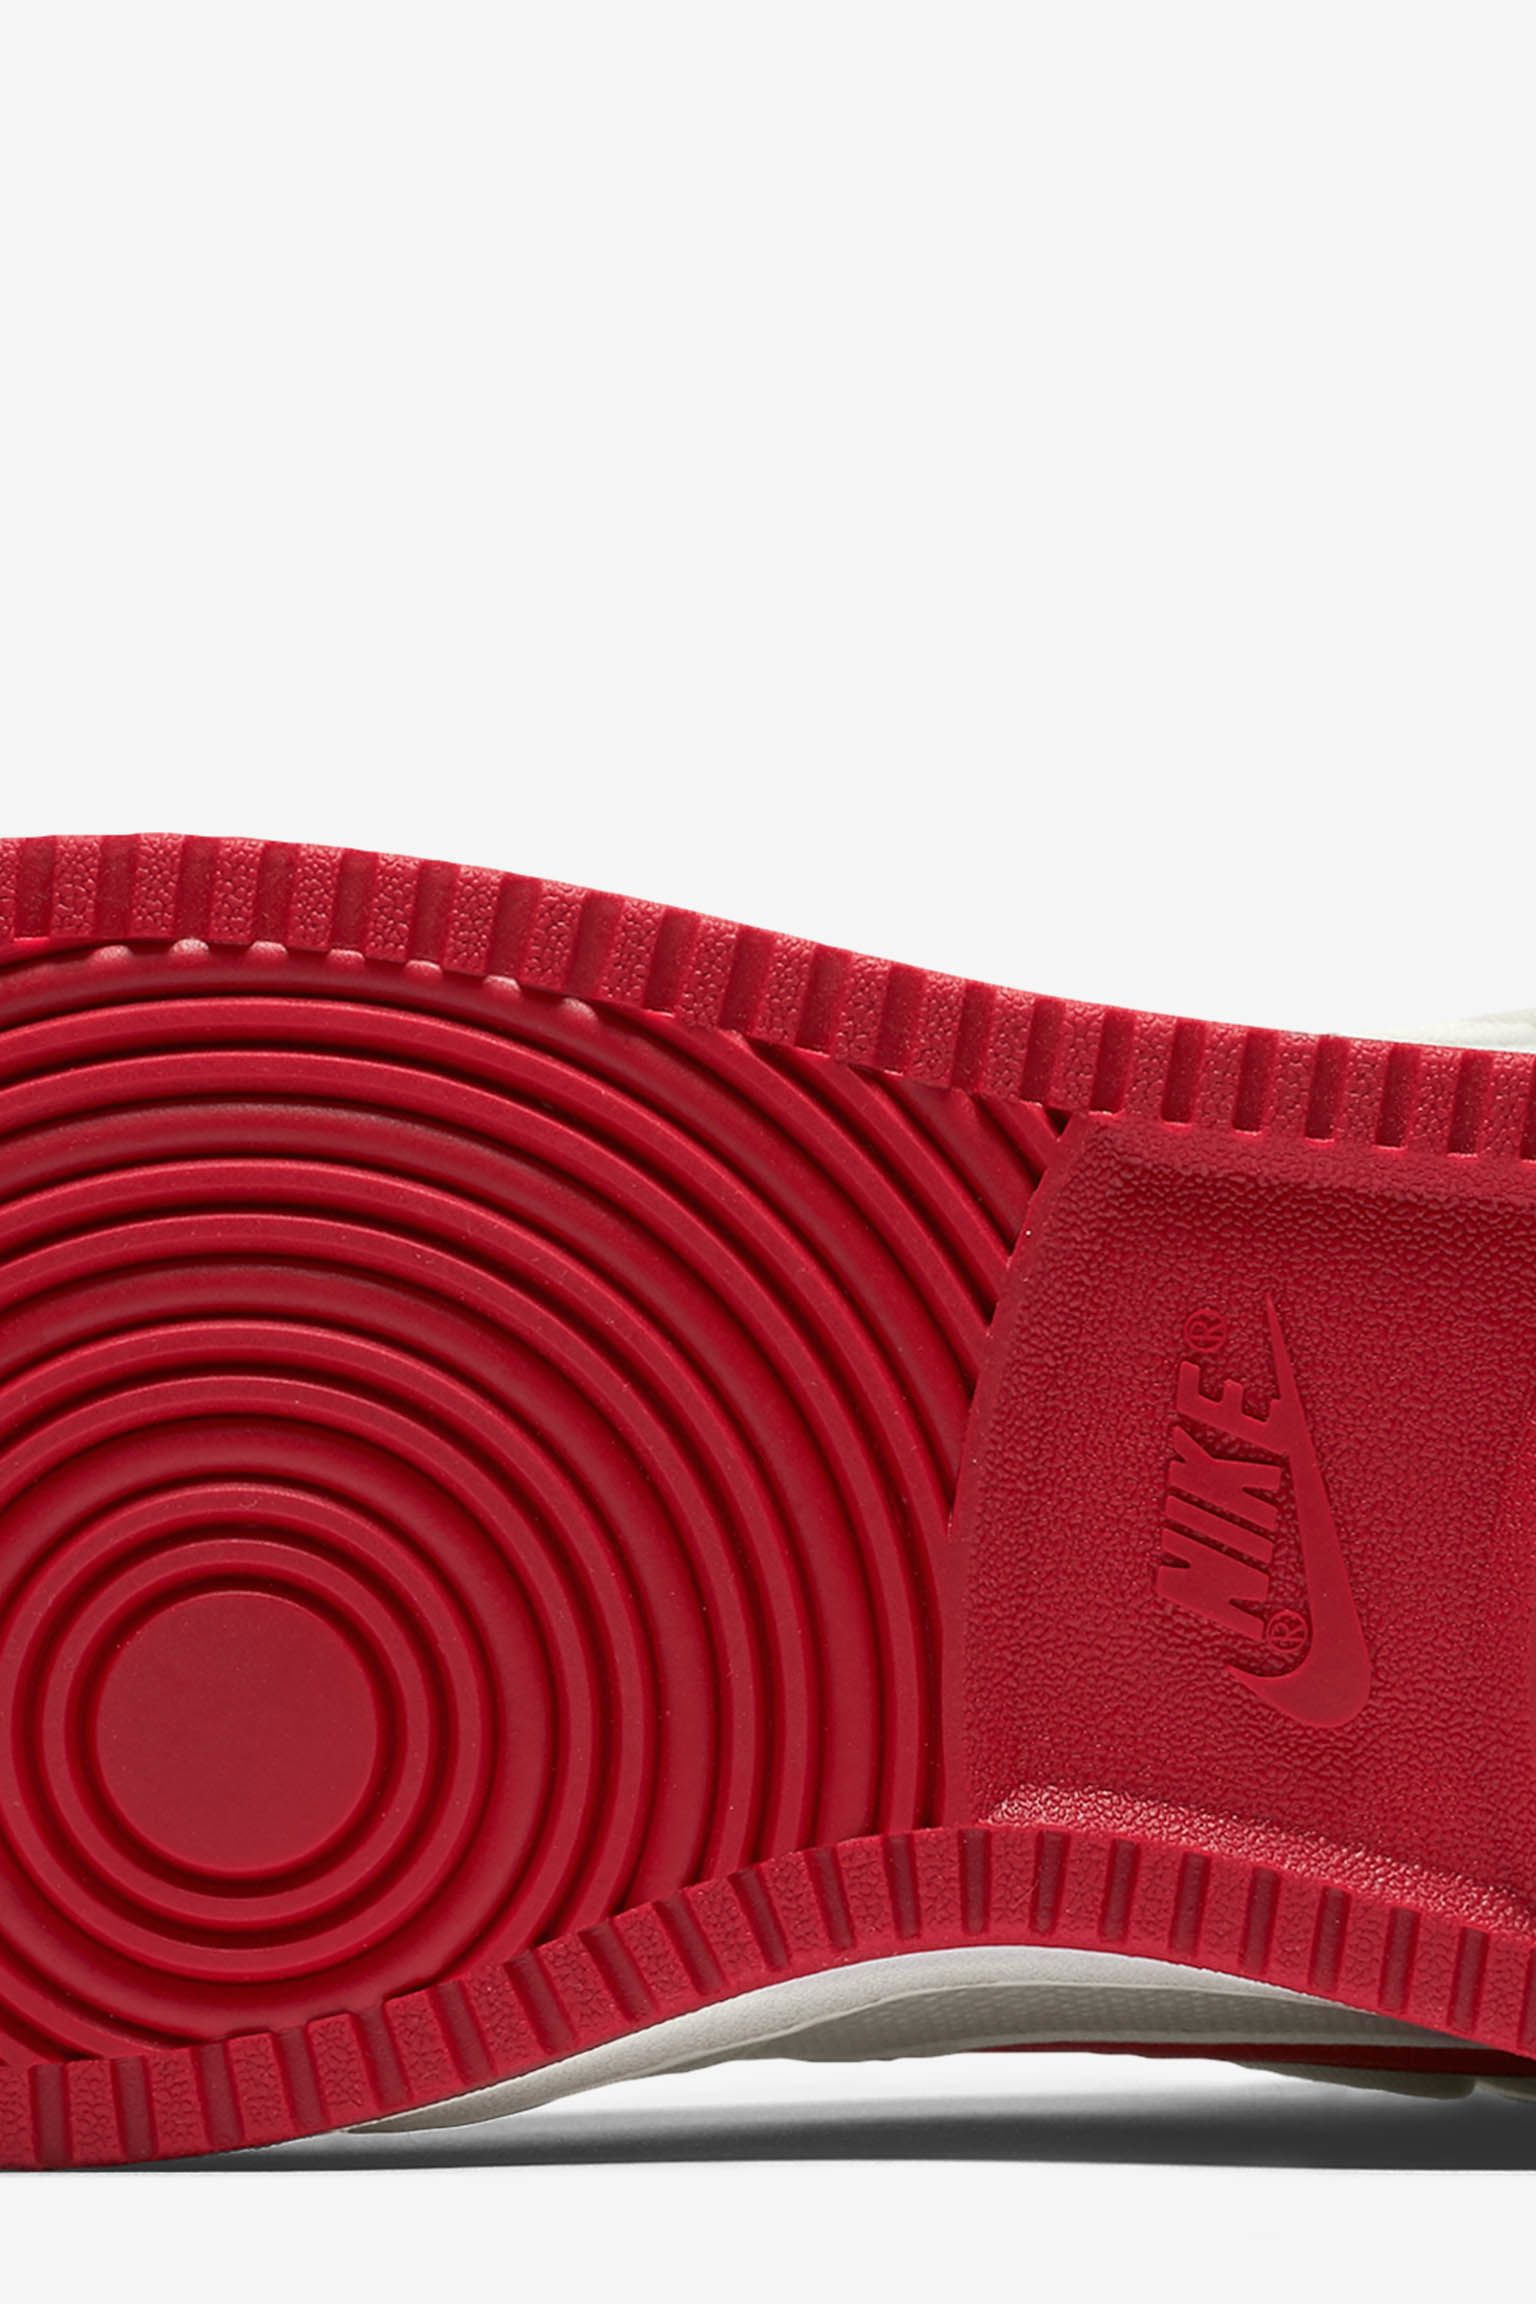 Air Jordan 1 KO 'Timeless Canvas' Release Date. Nike SNKRS